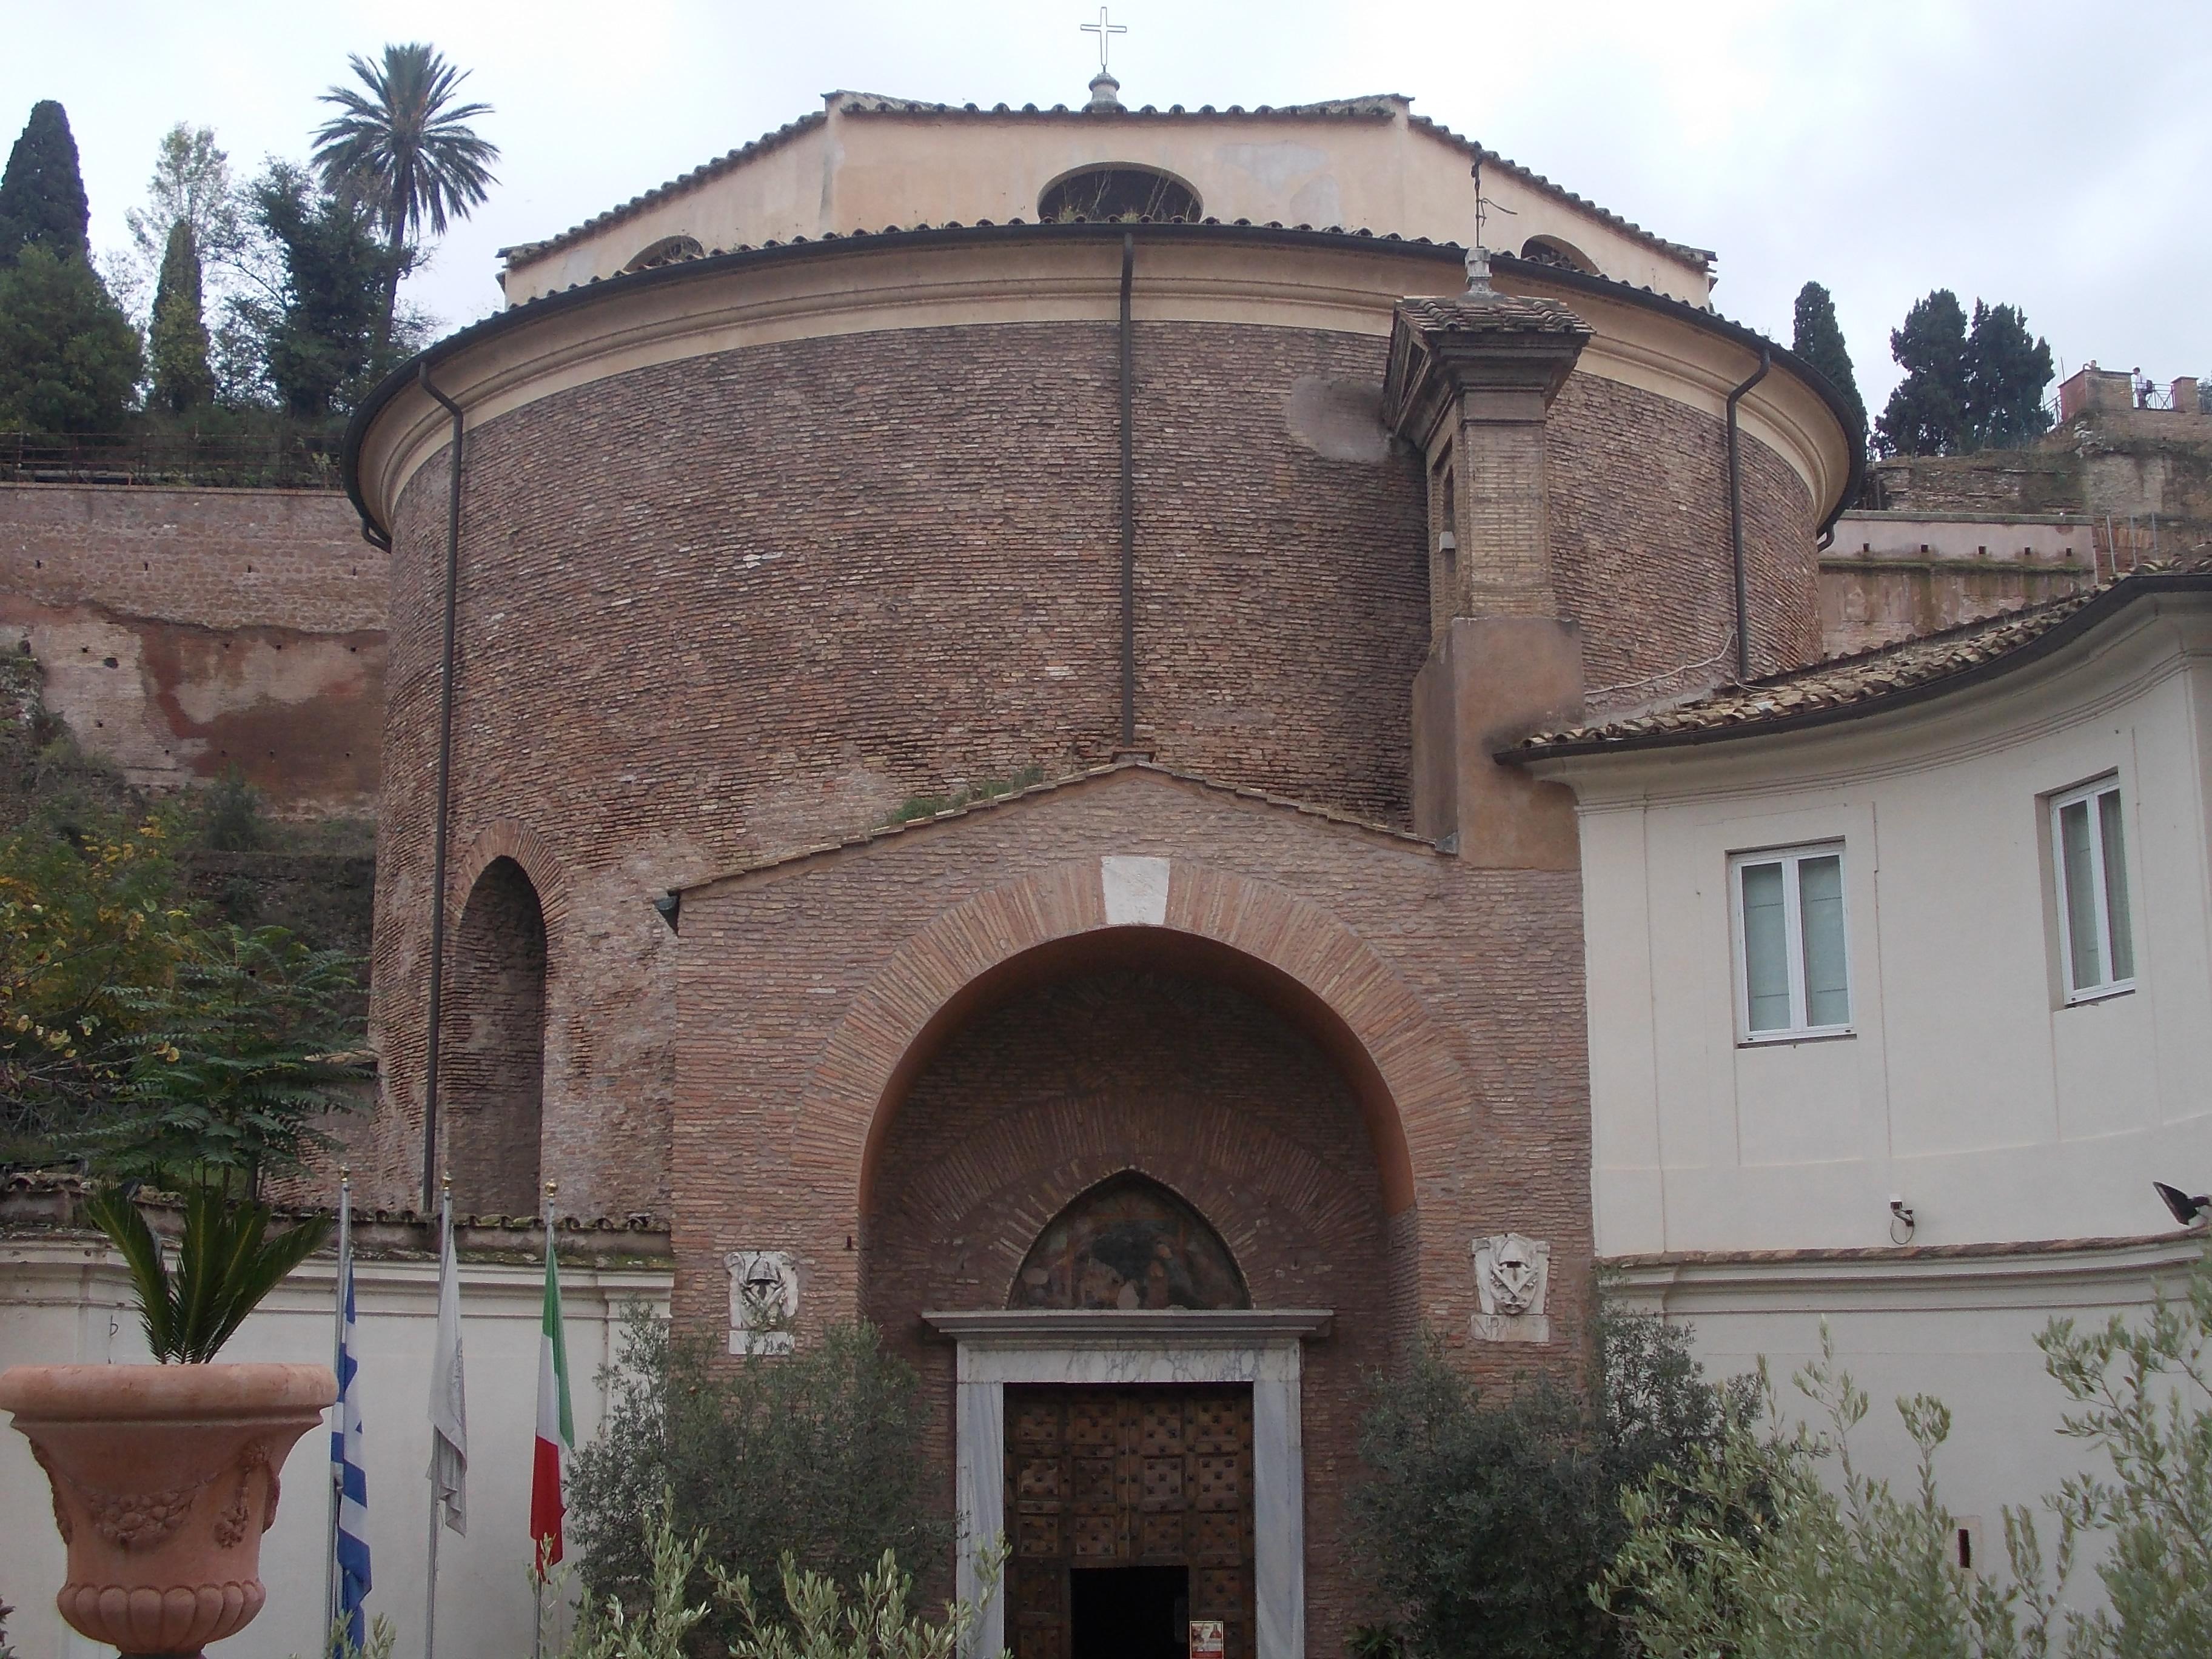 Chiesa di San Teodoro al Palatino